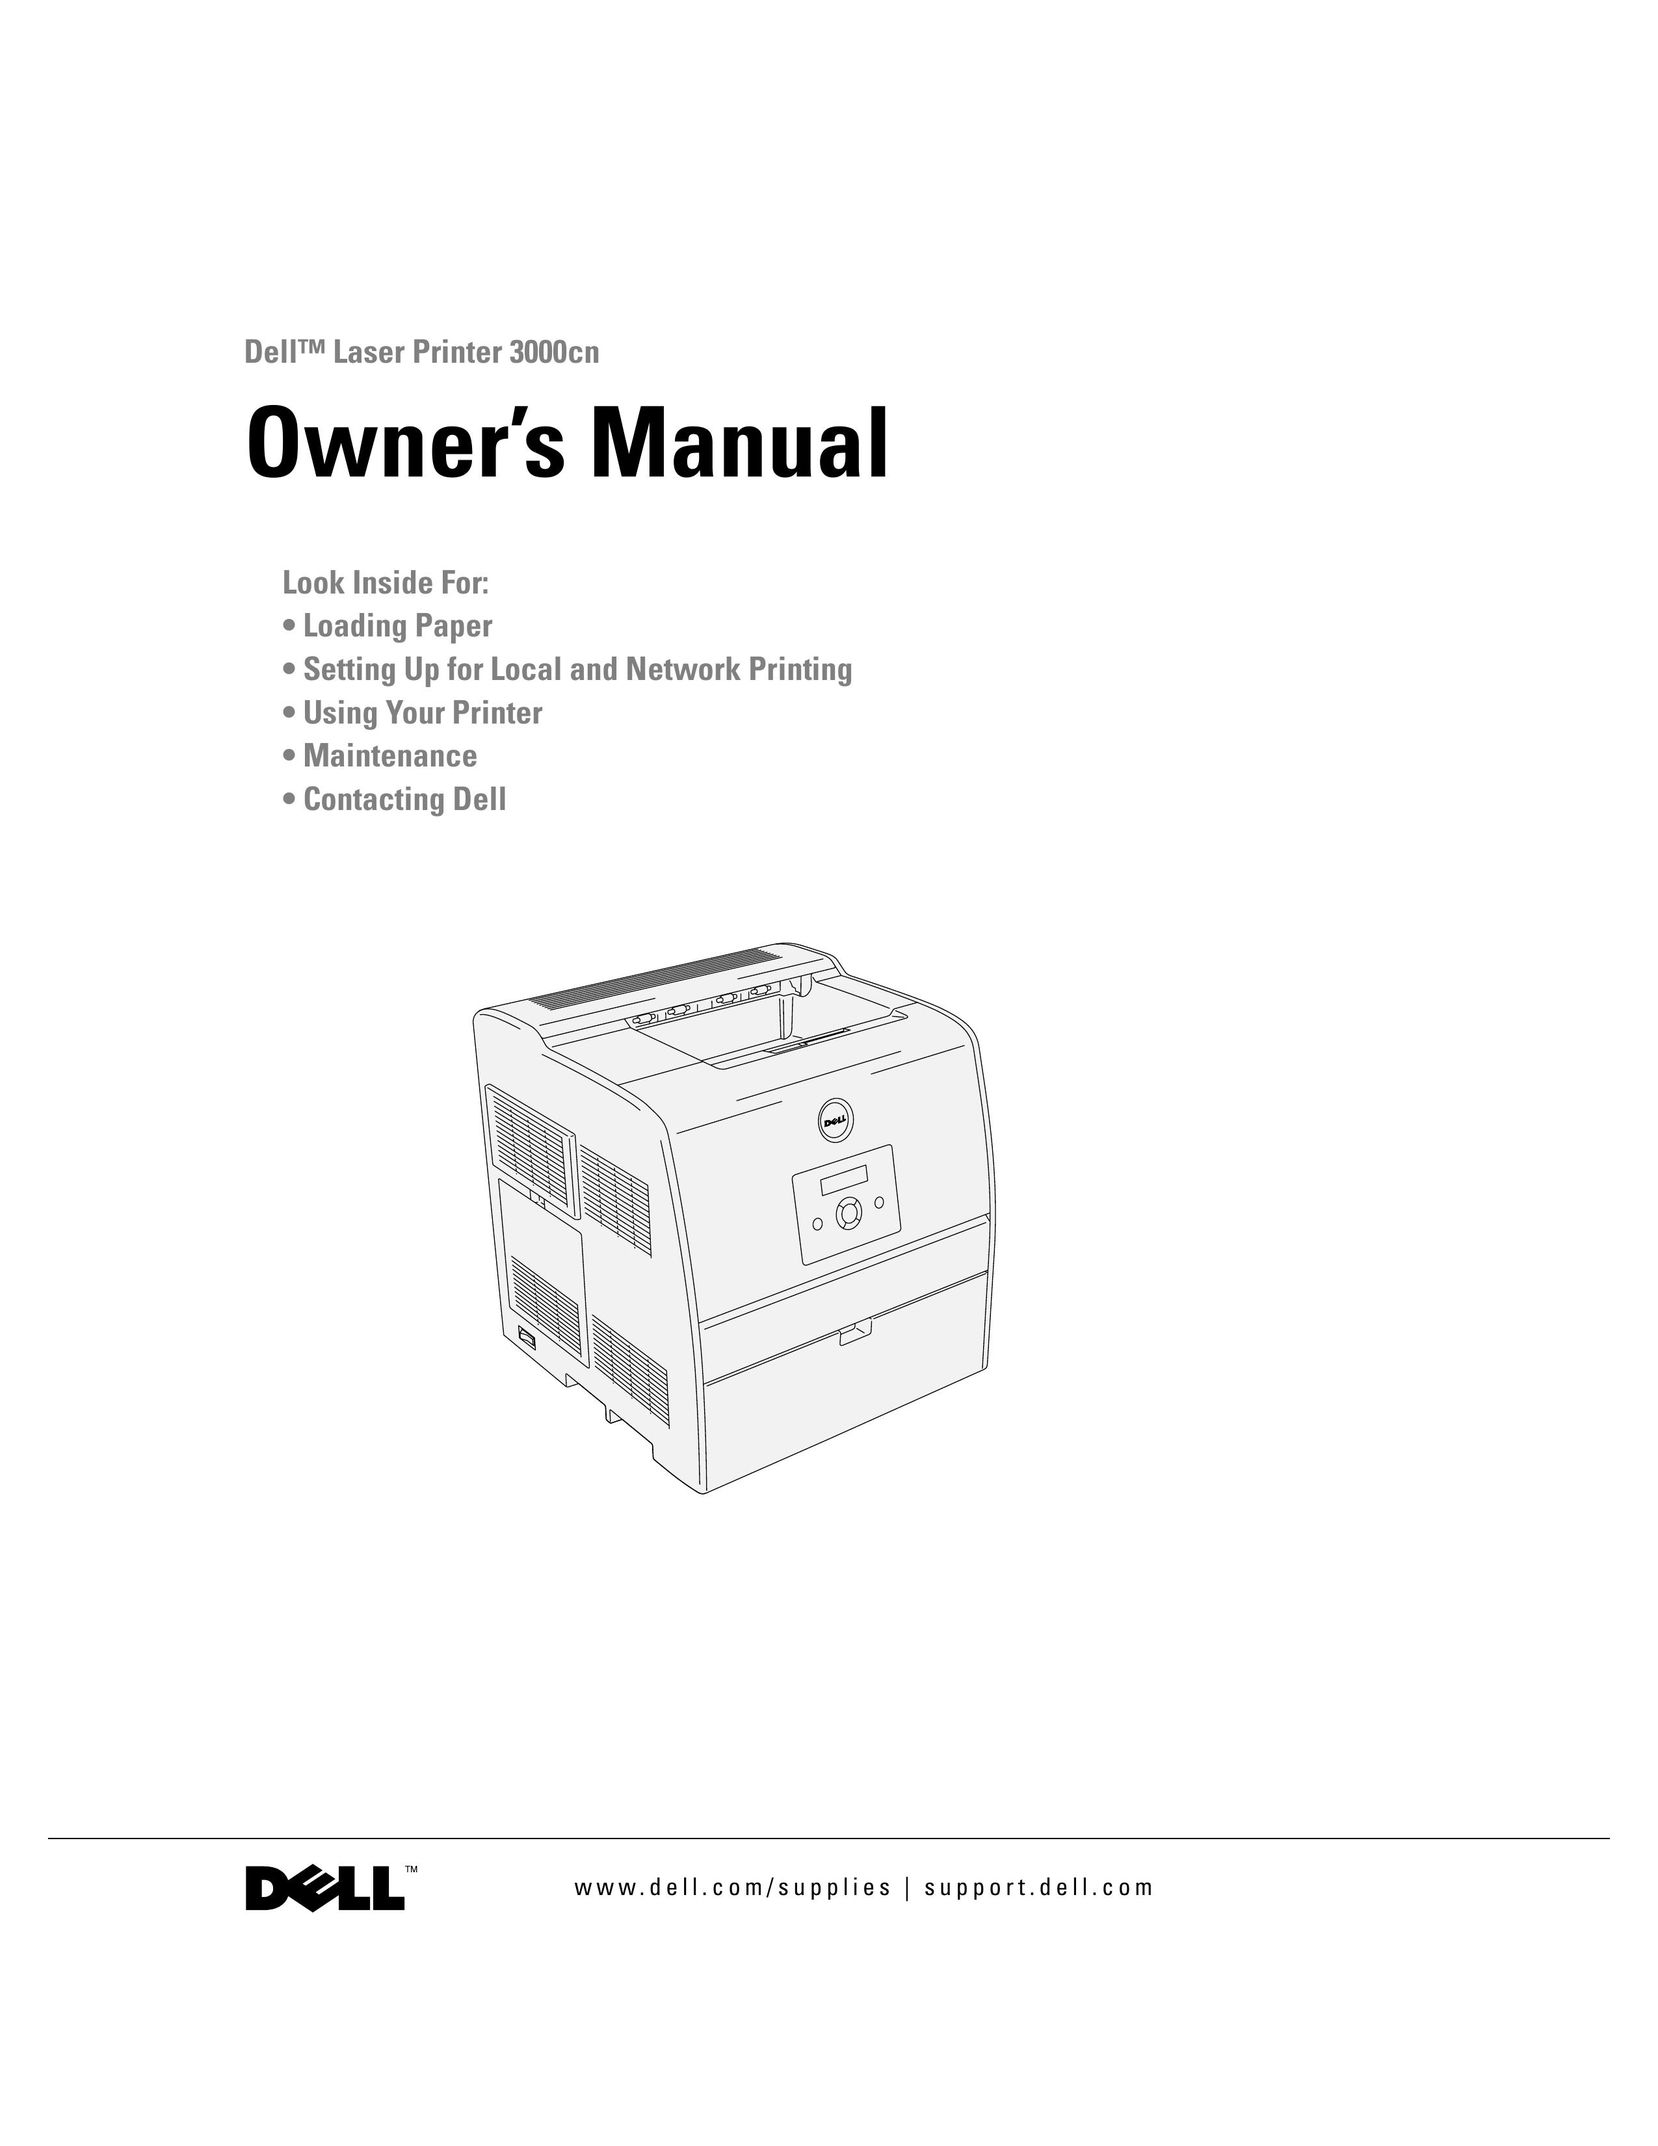 Dell 3000cn Printer User Manual